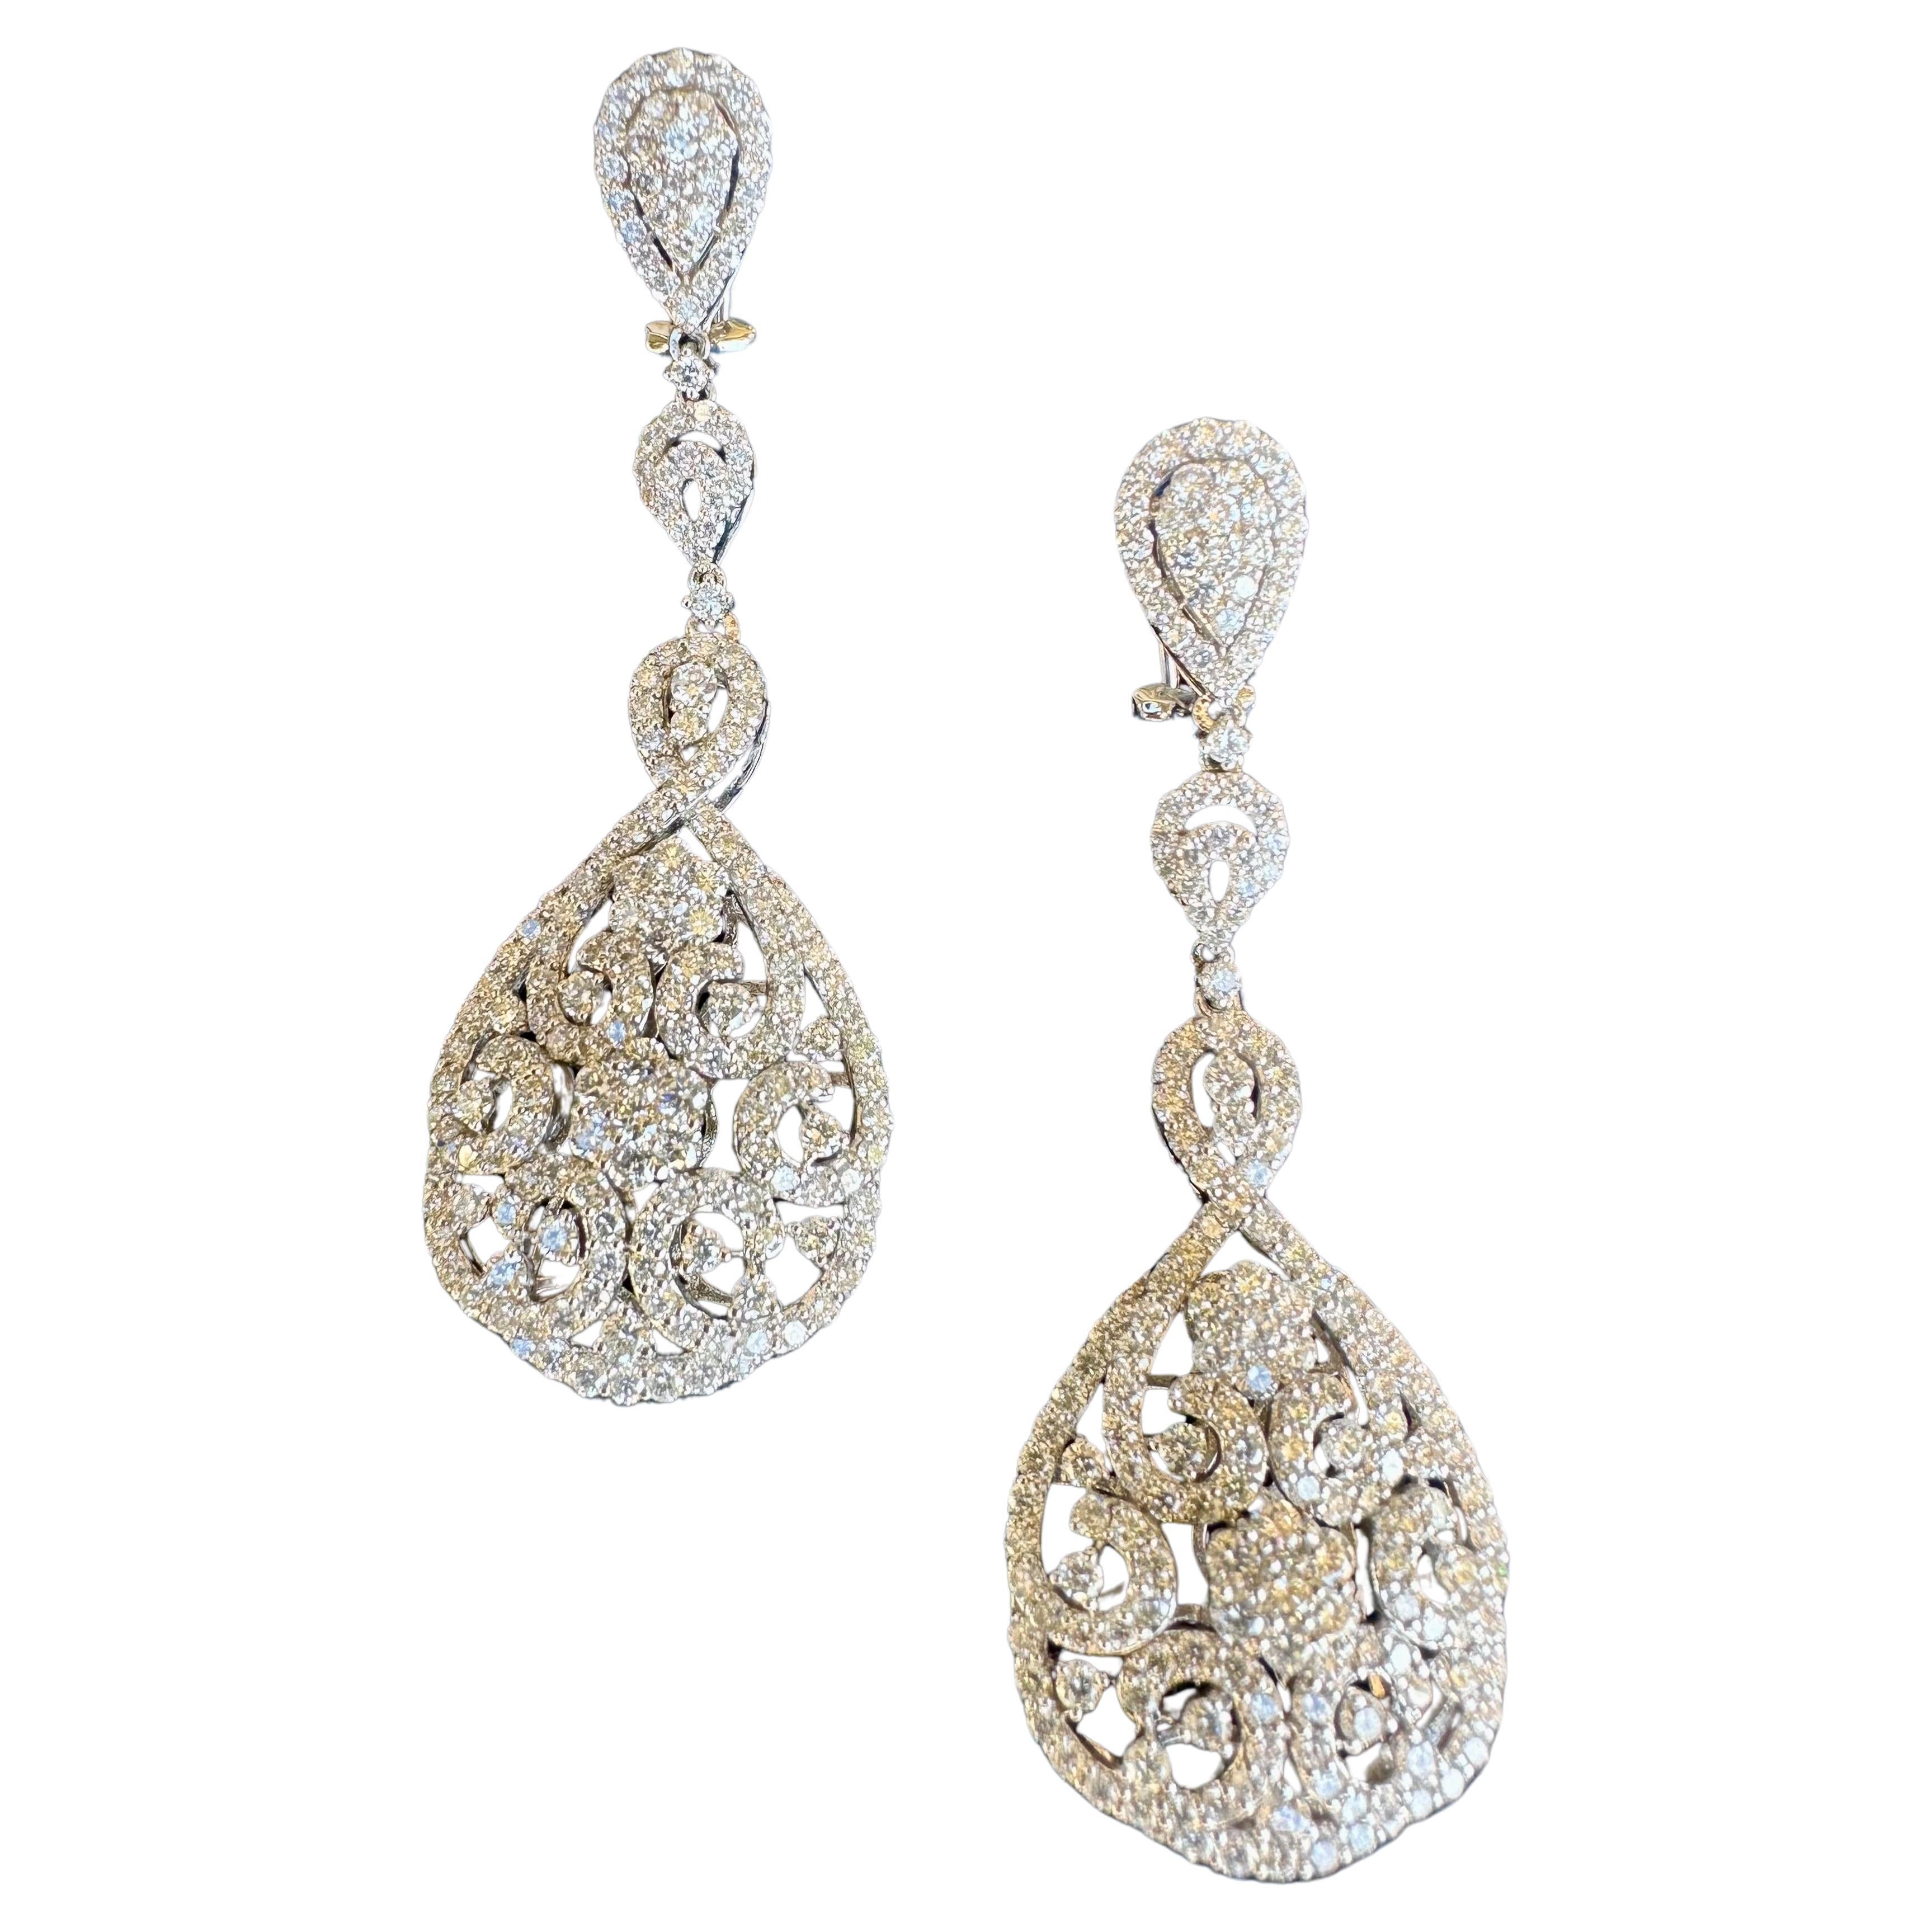  Elegant 15 Carat Diamond Pear Shaped Cluster Drop Earrings 18 Karat White Gold